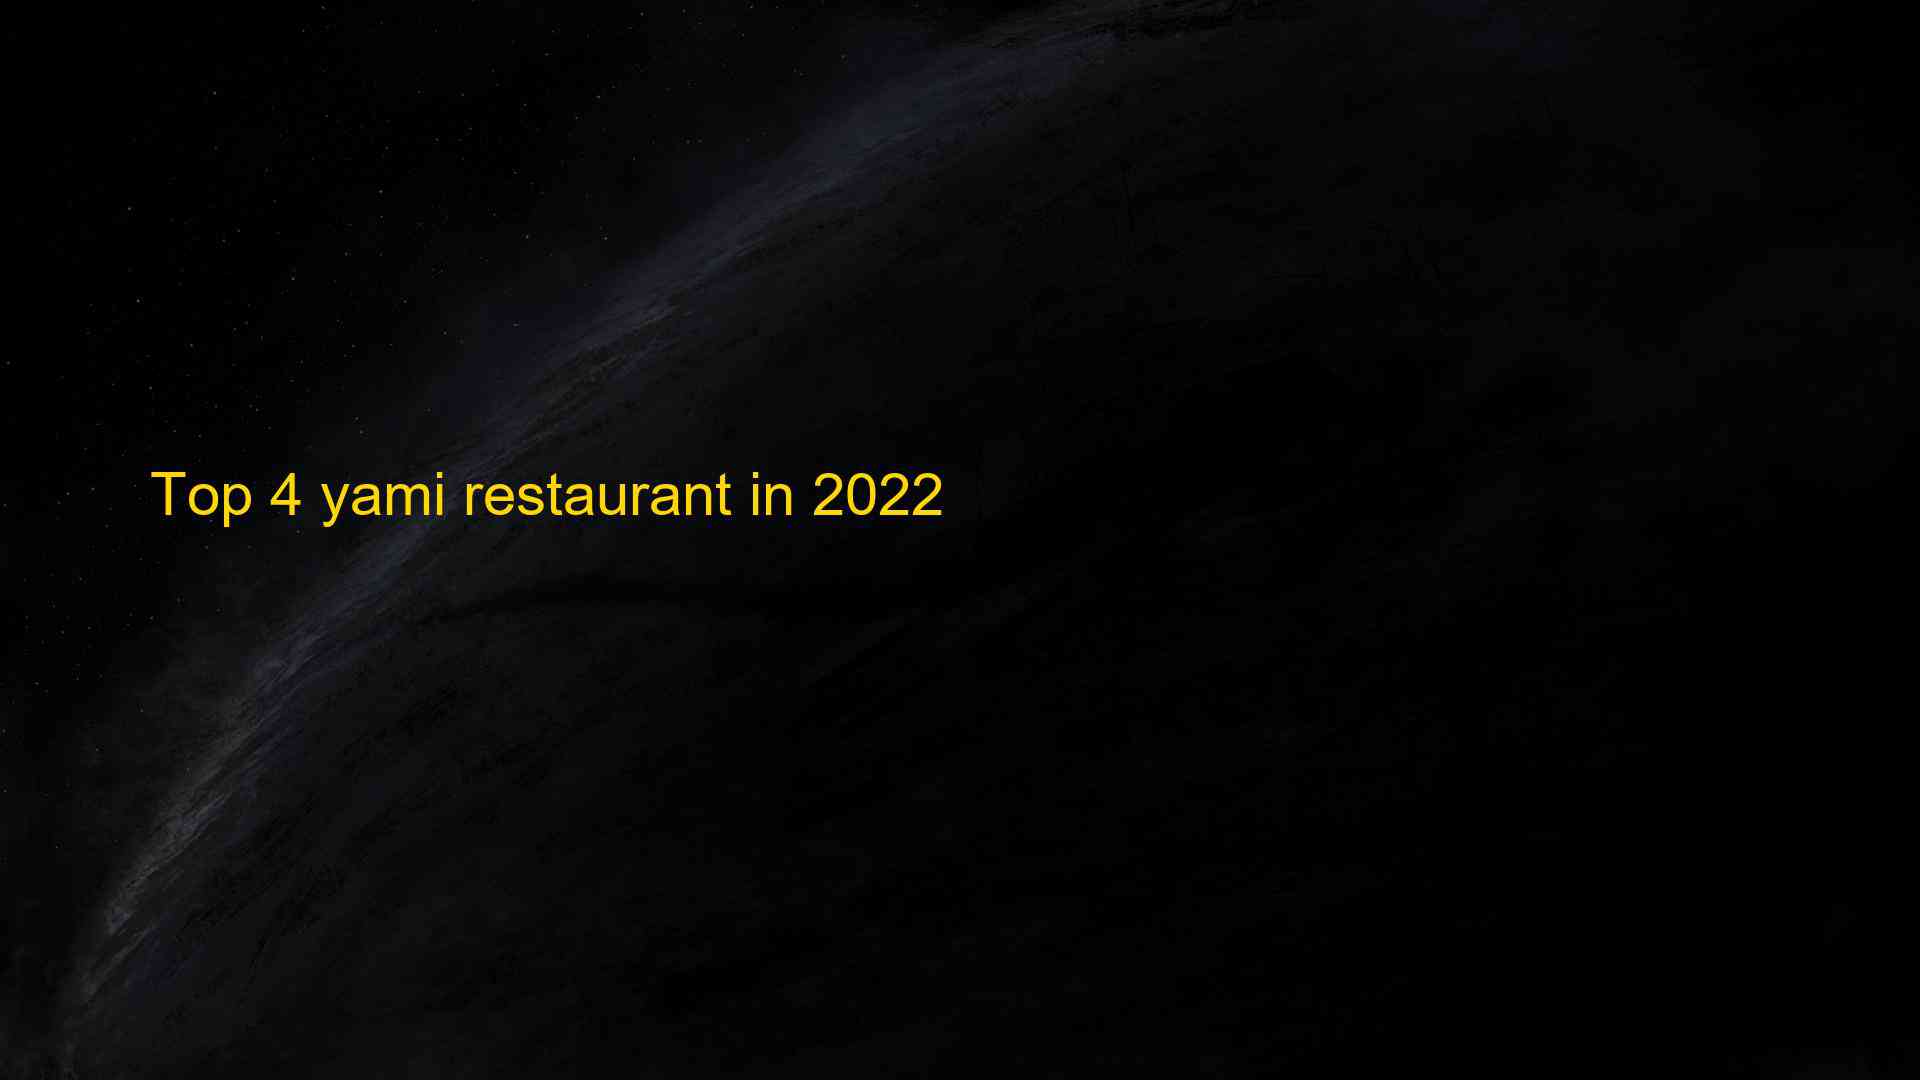 Top 4 yami restaurant in 2022 1663394031